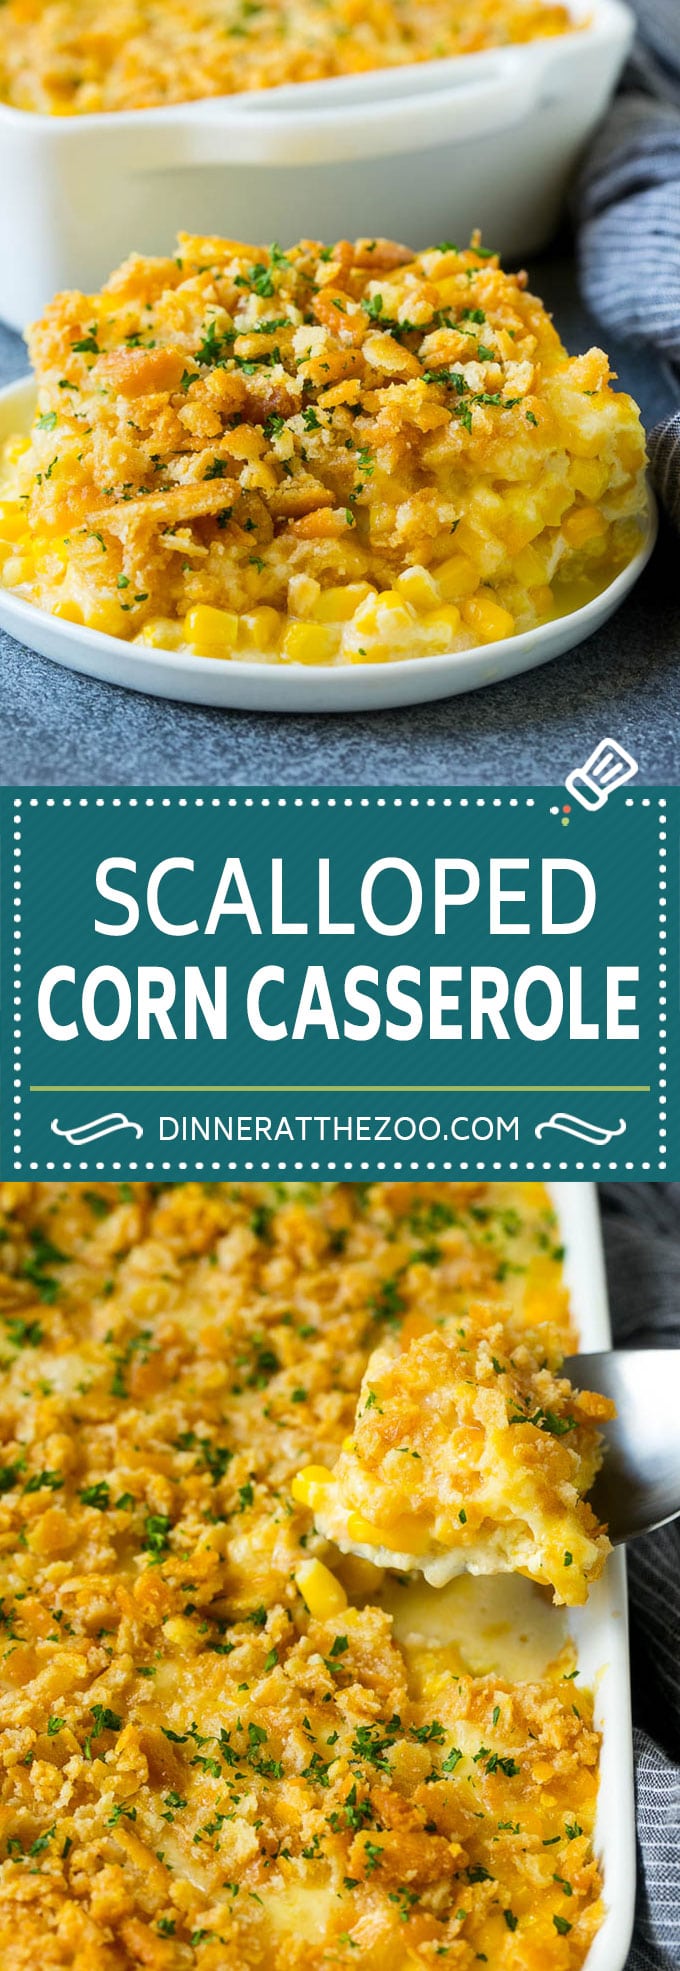 Scalloped Corn | Corn Casserole #corn #casserole #cheese #sidedish #dinner #dinneratthezoo